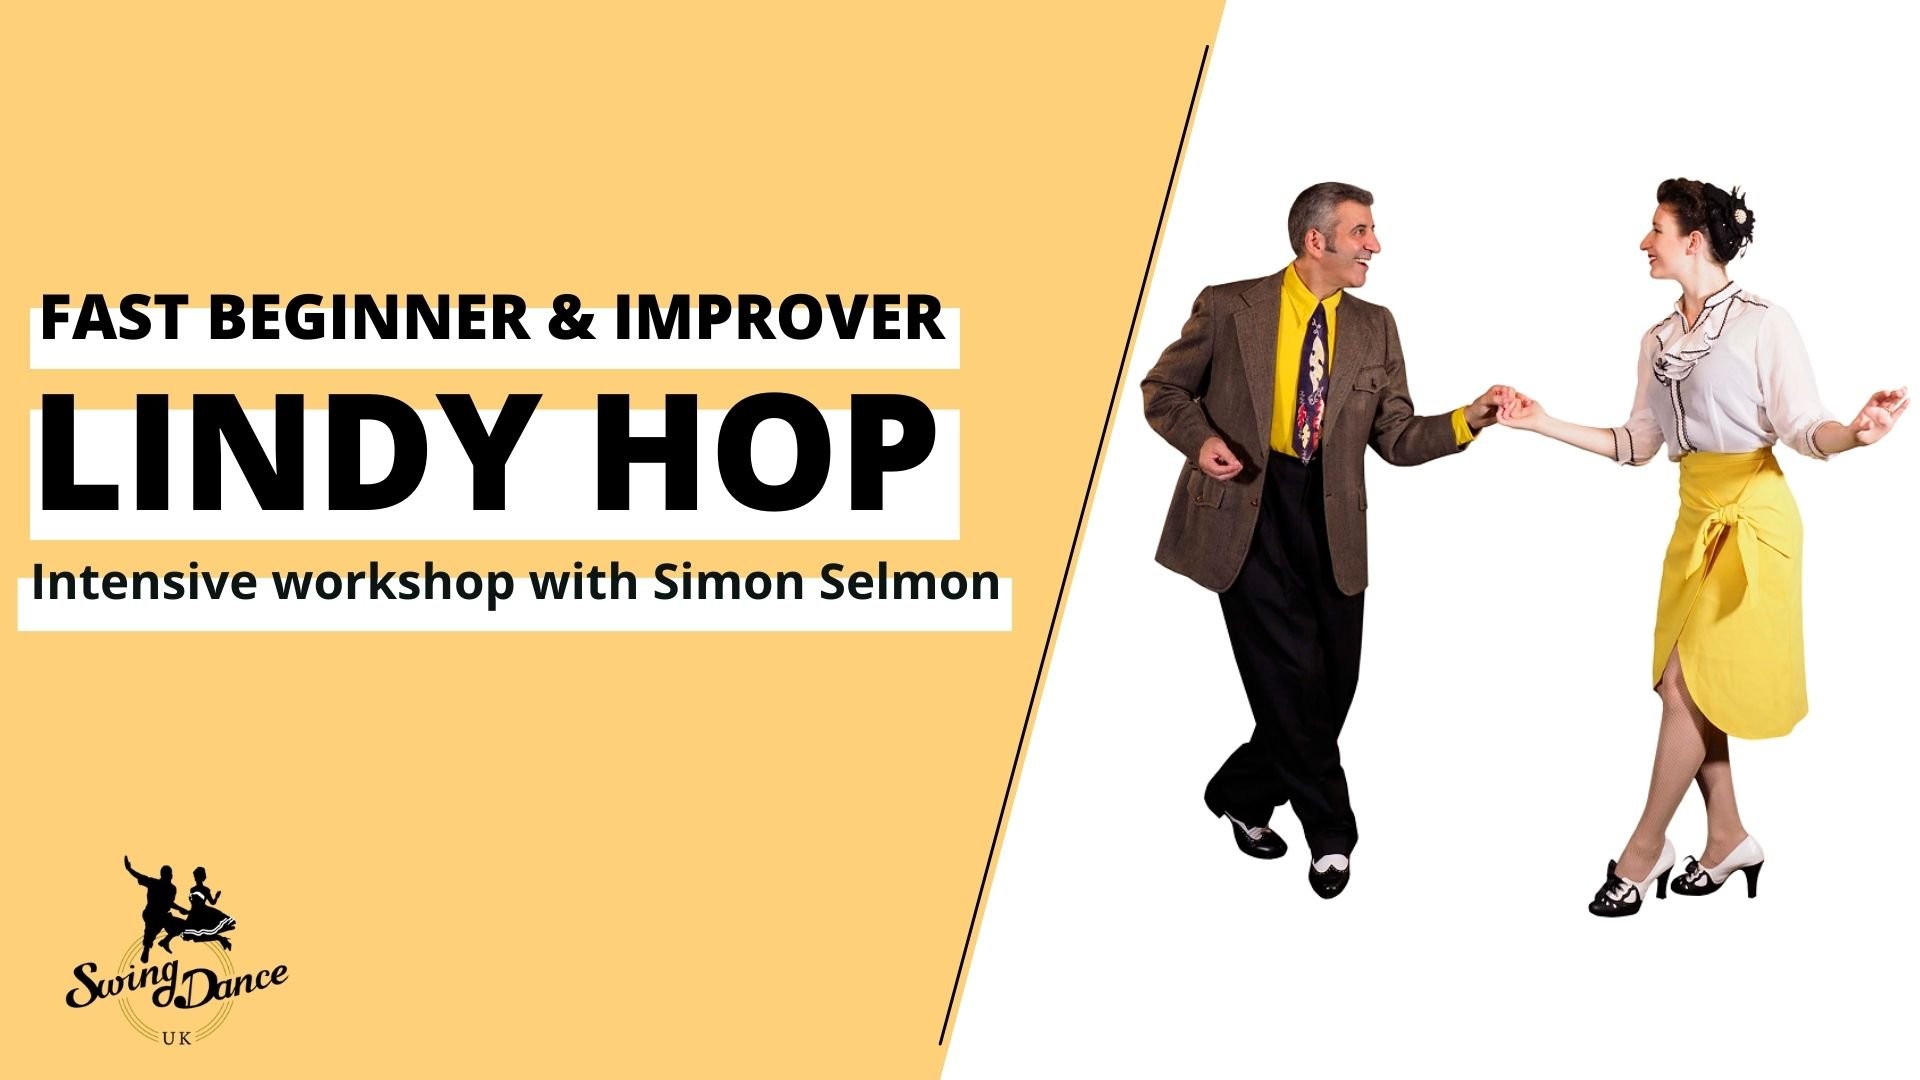 Fast-Beginners & Improvers Lindy Hop Workshop